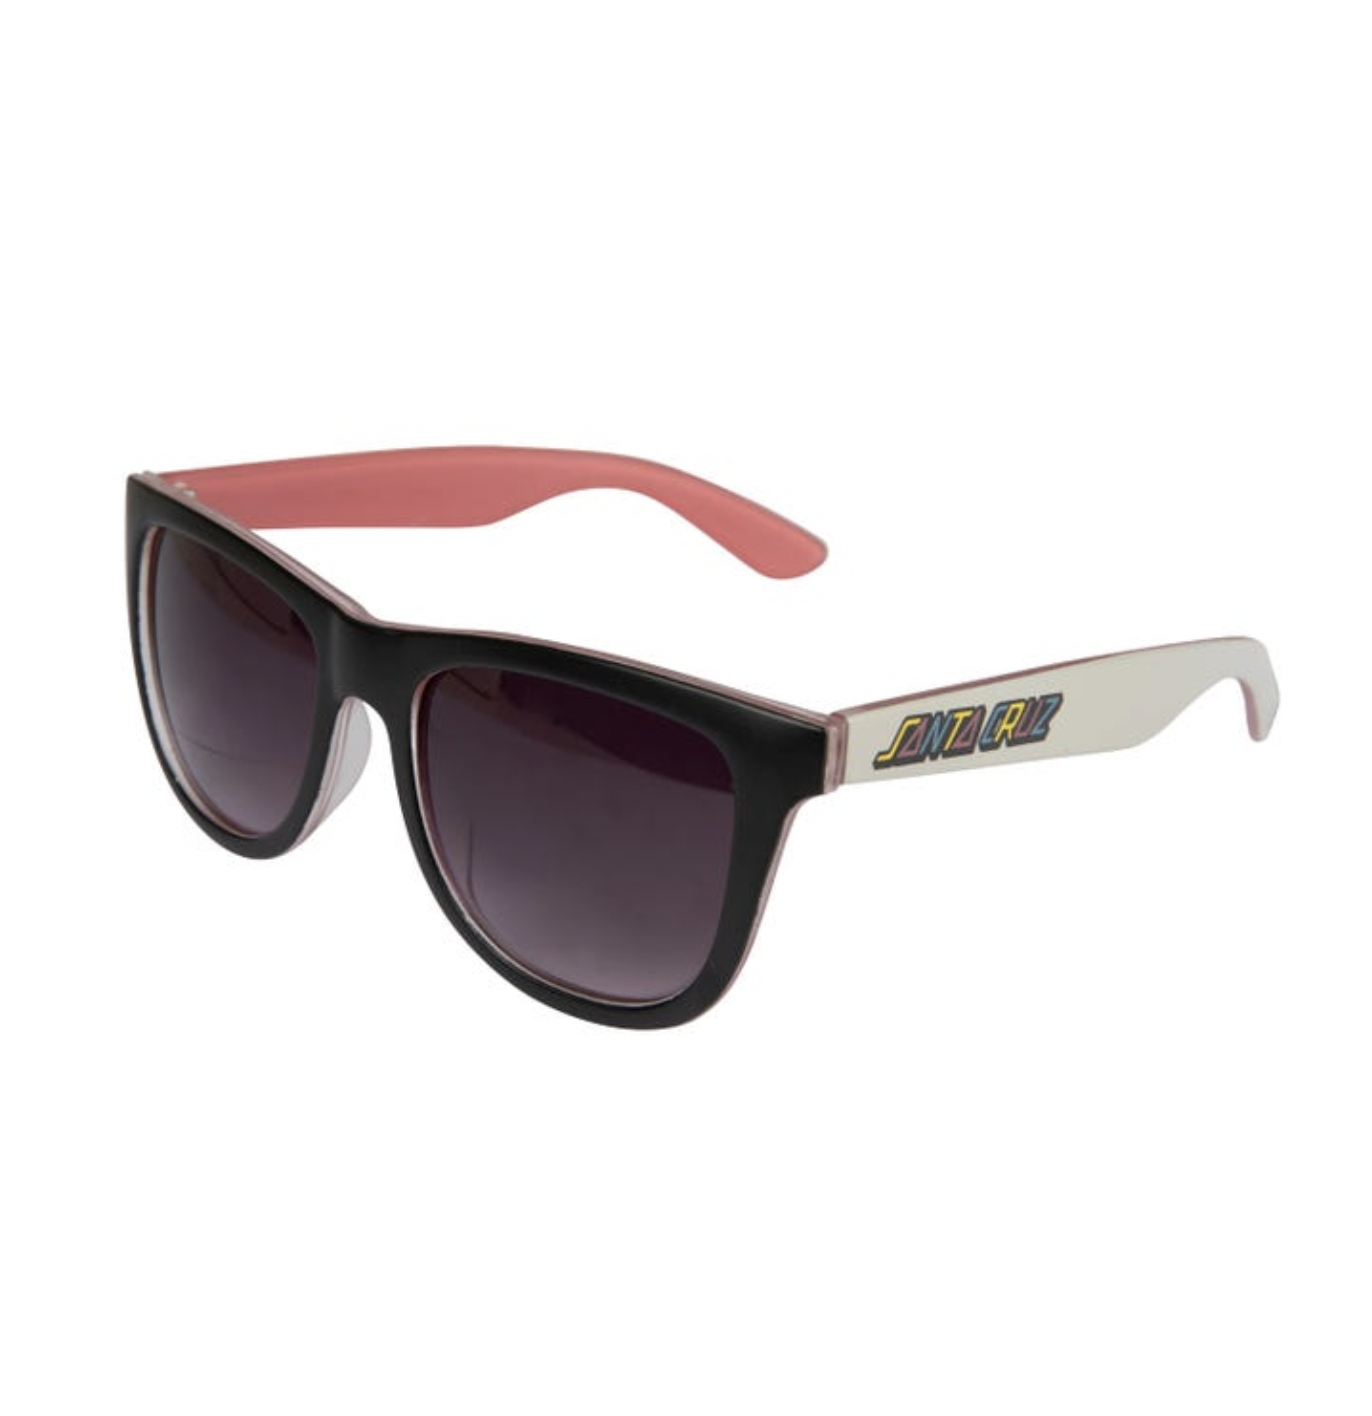 Strip In Colour Sunglasses Grey/Burgundy SANTA CRUZ